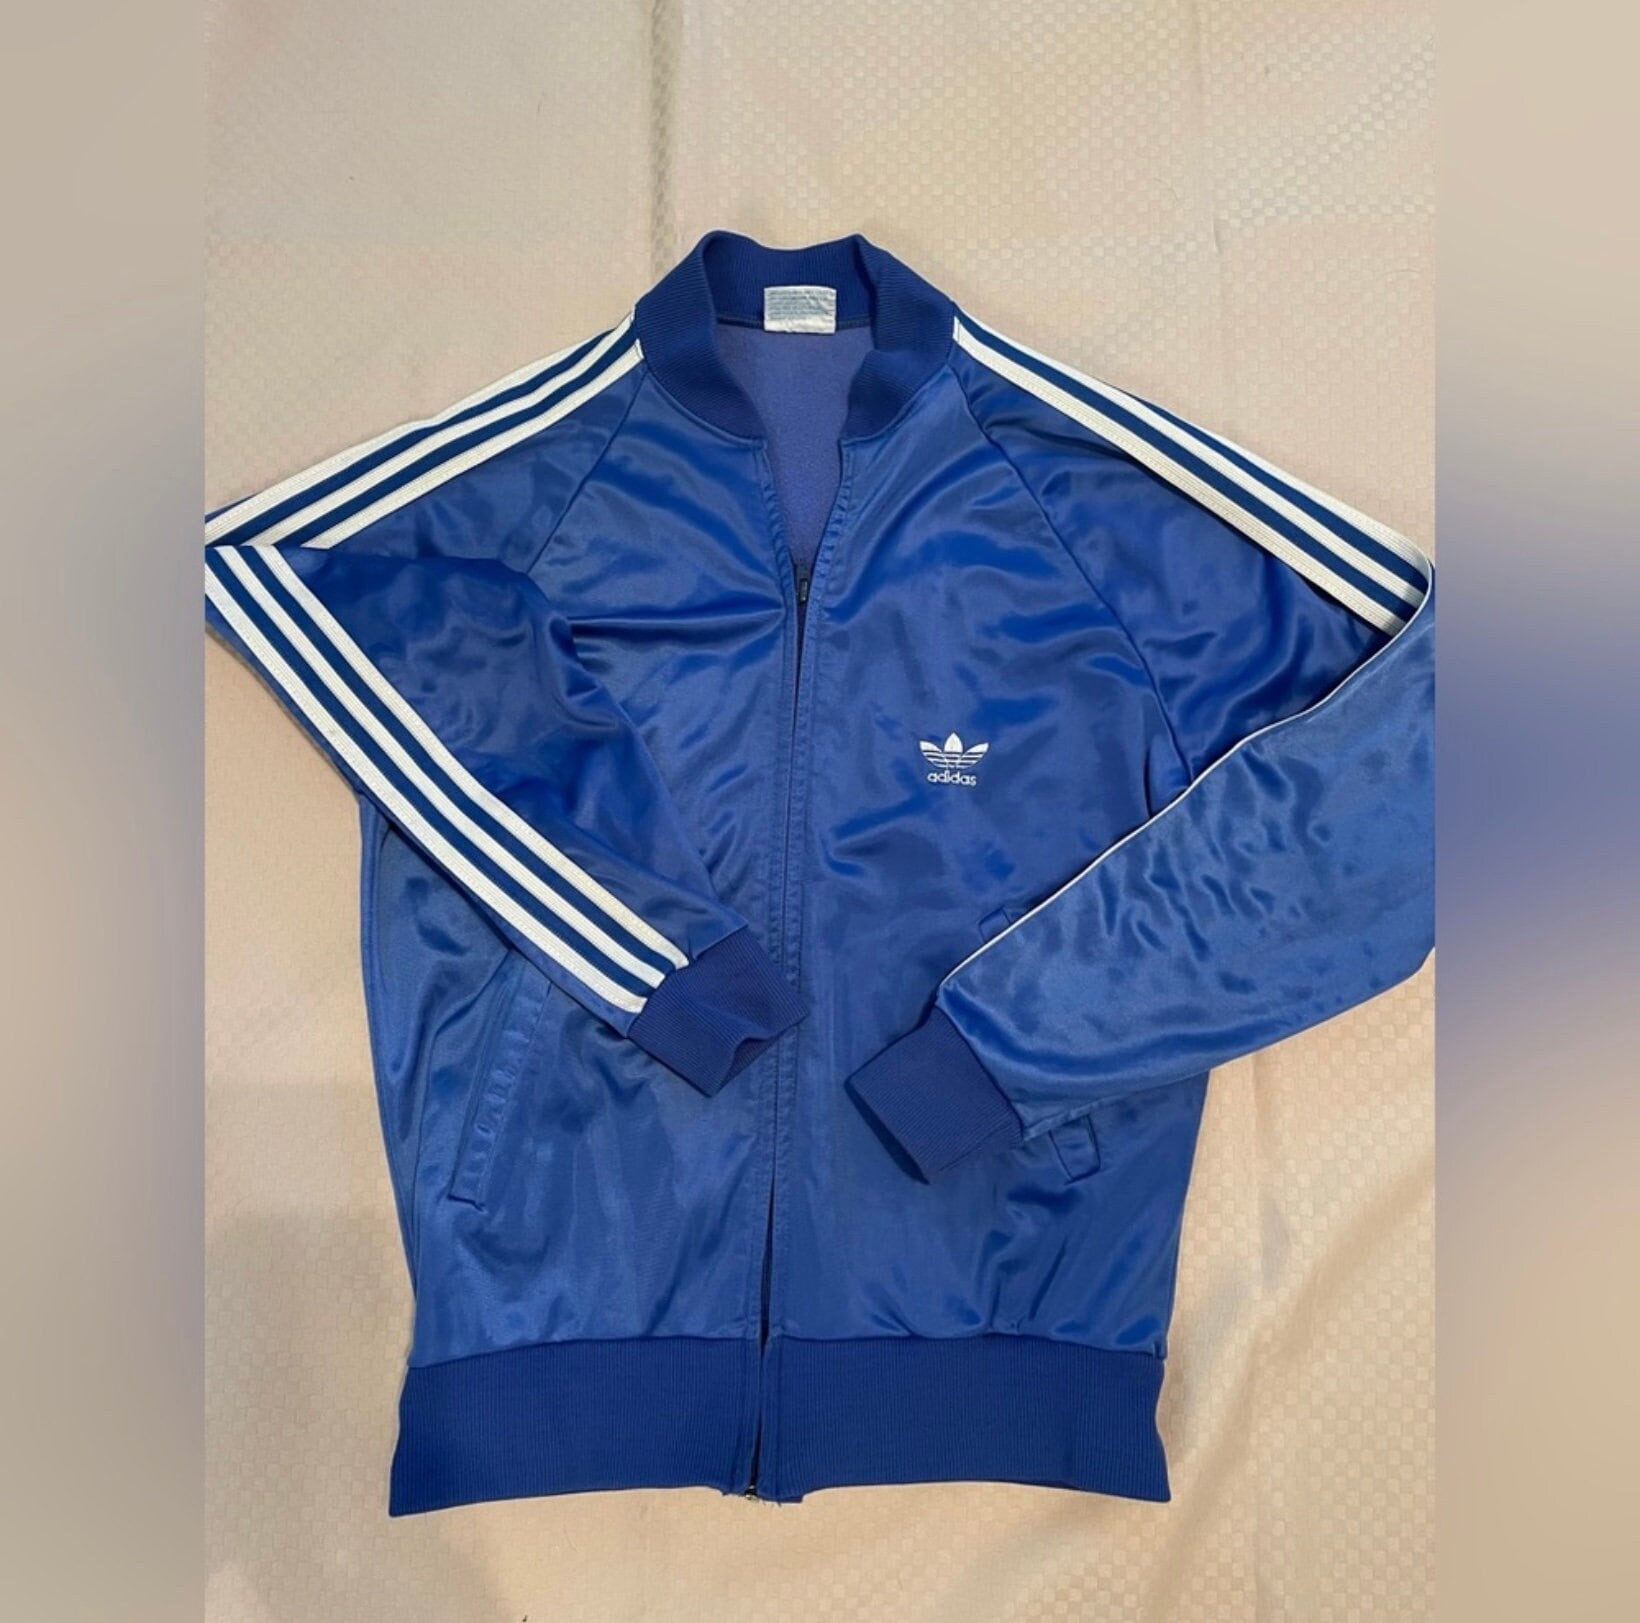 Adidas ATP Keyrolan vintage 1980s blue warm up track suit jacket. Rare